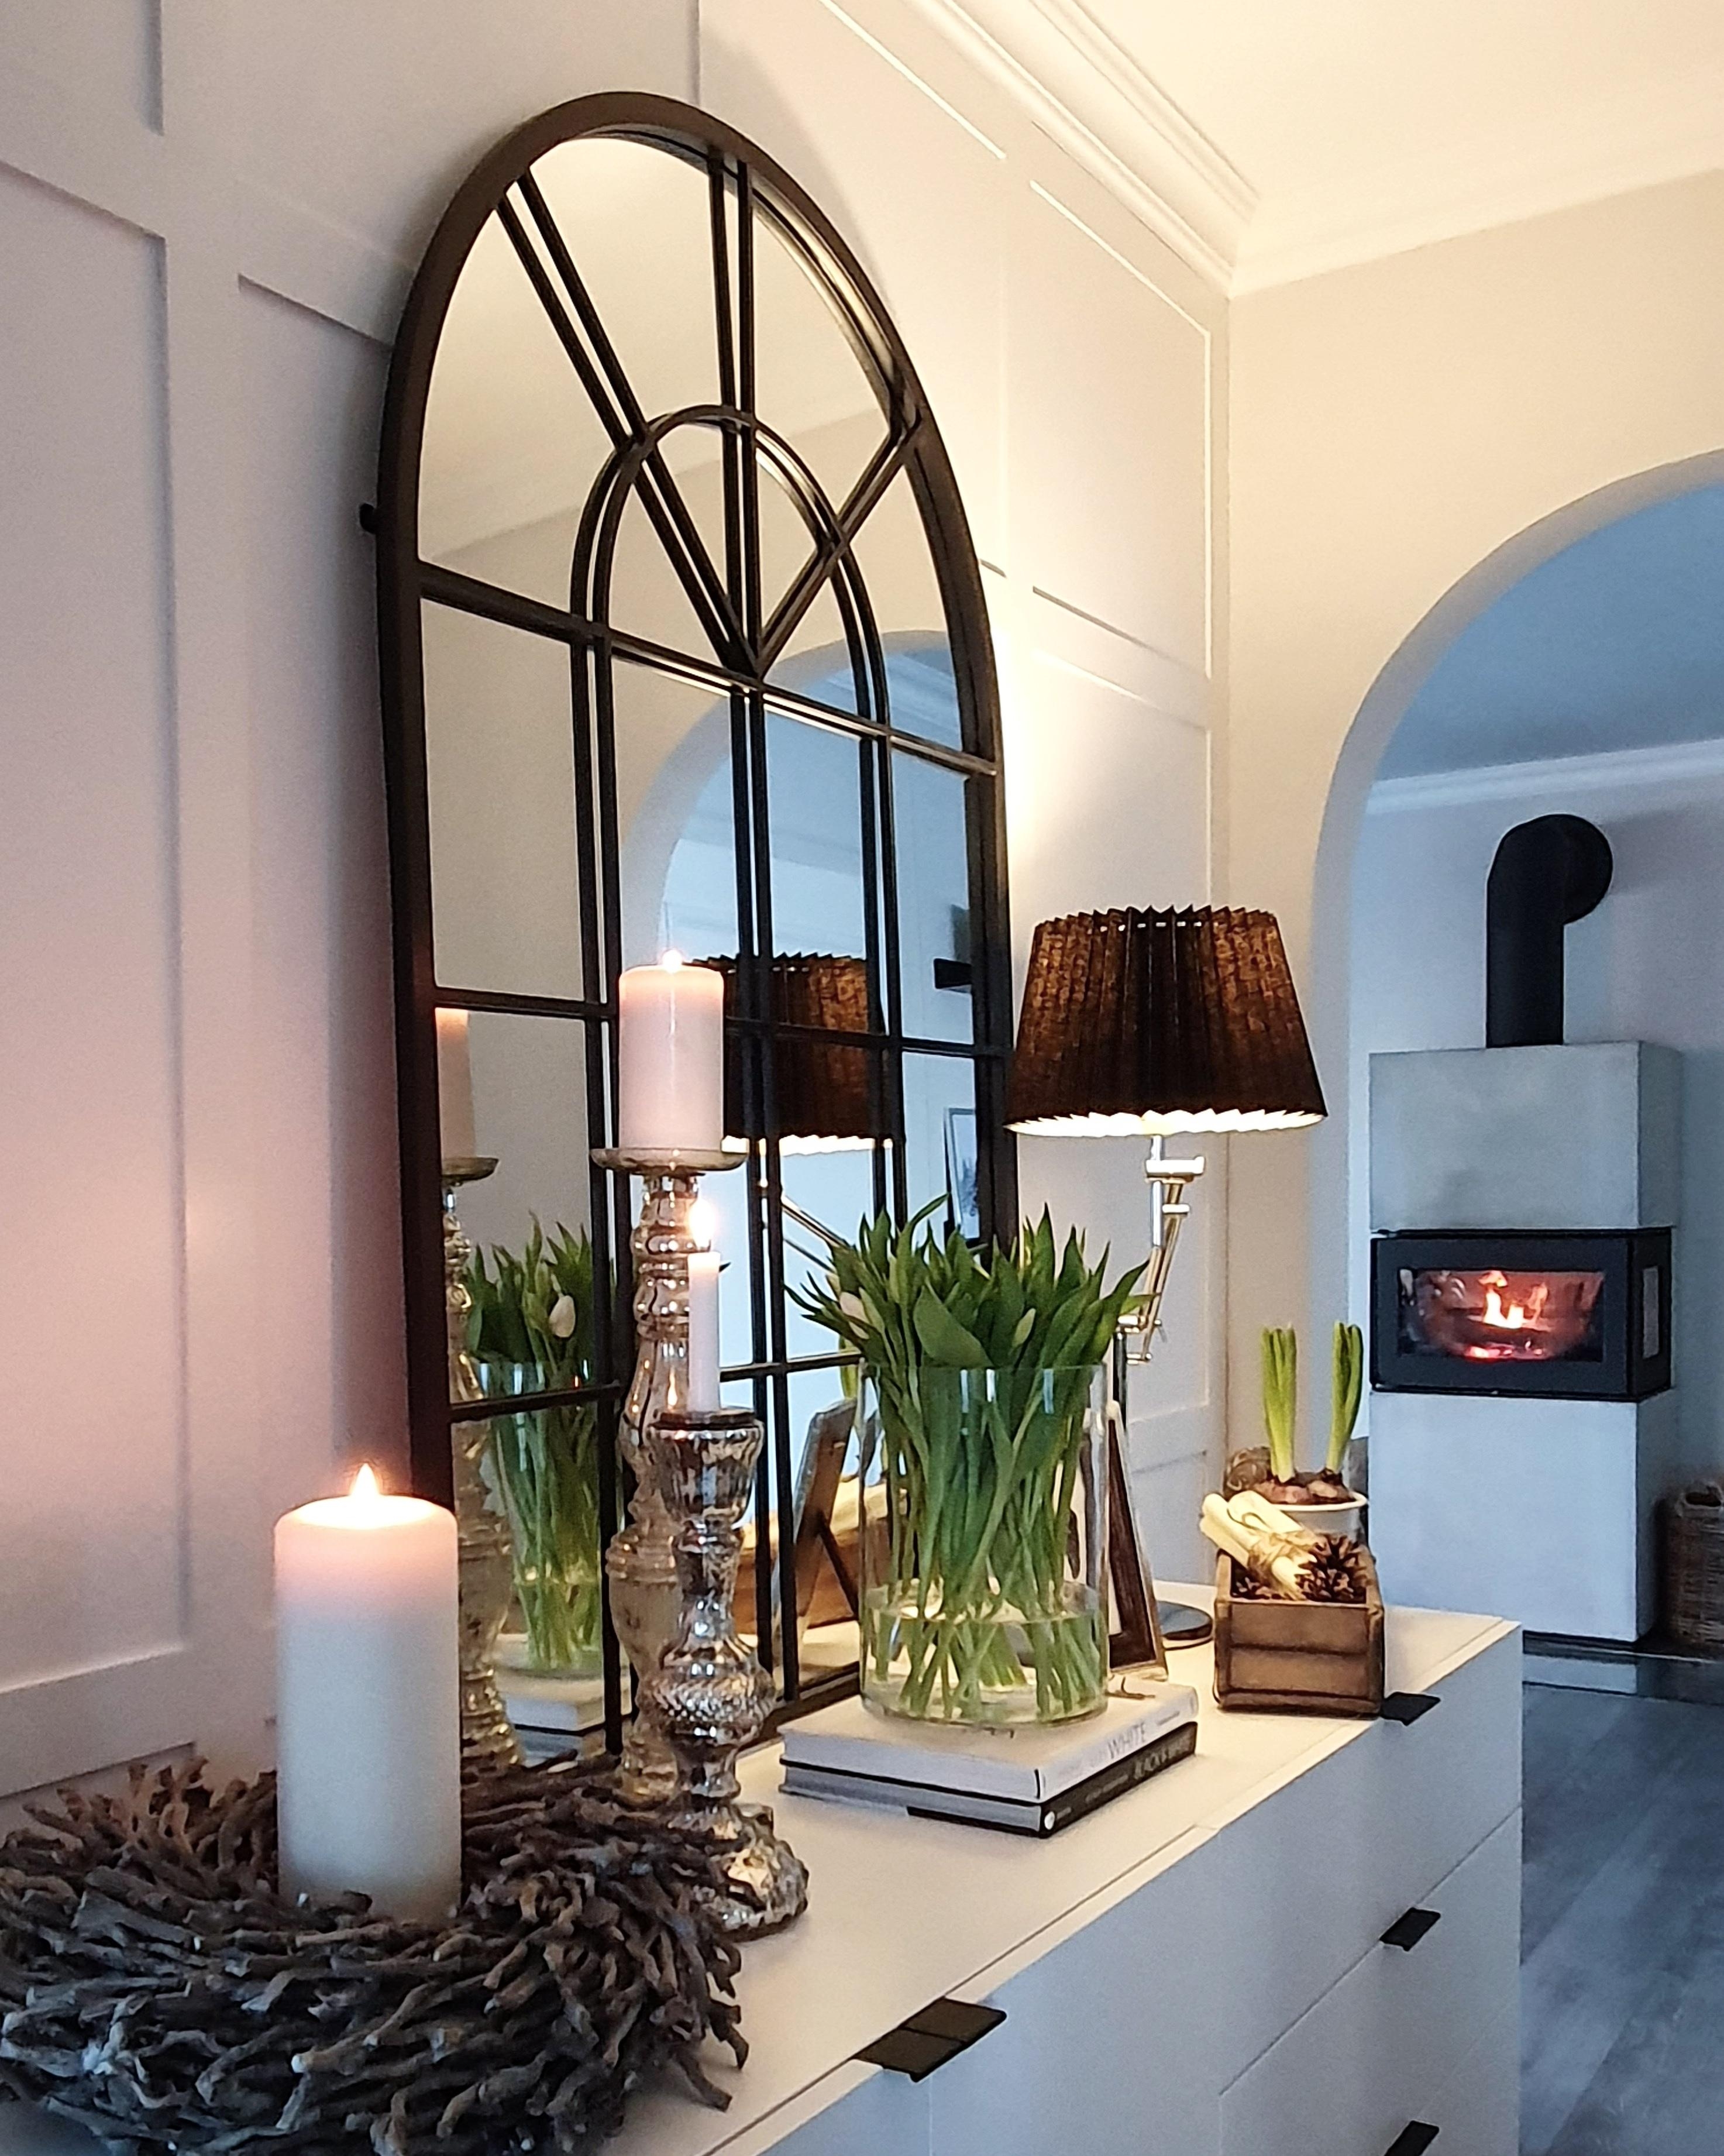 #Living #Kaminfeuer #Flur #Sideboard #Tulips #Fireplace #Cozyliving #gemütlichkeit